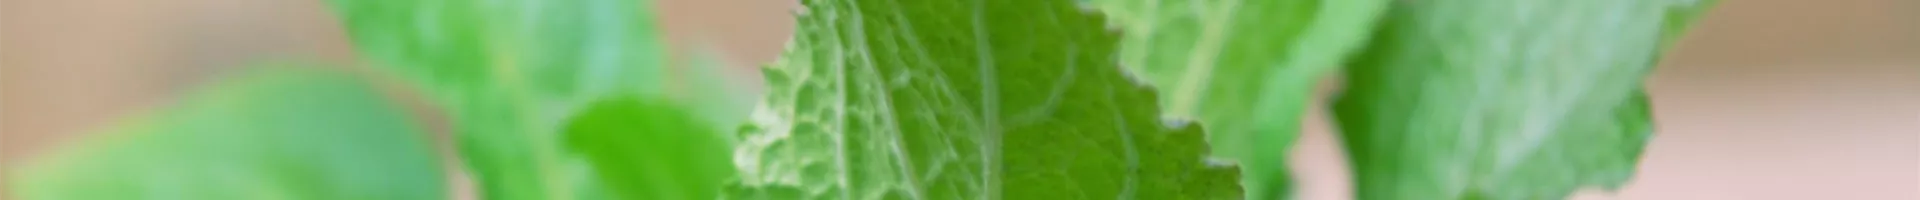 Fingerhut - Einpflanzen im Garten (thumbnail).jpg